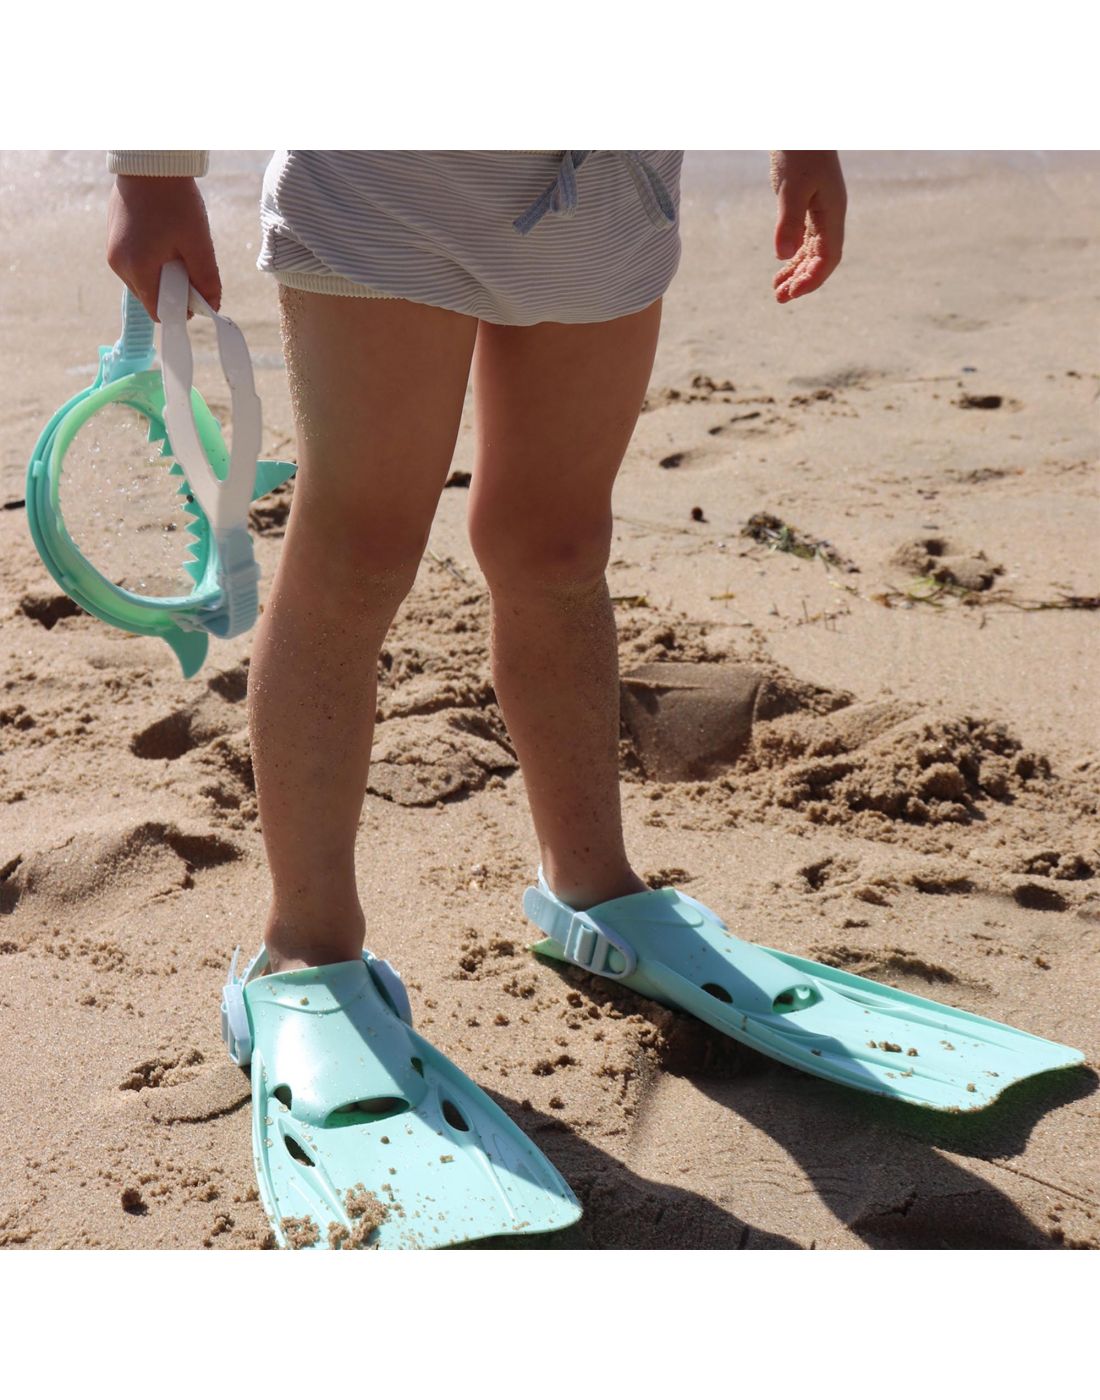 SunnyLife Kids Snorkel Set Small Salty the Shark Multi